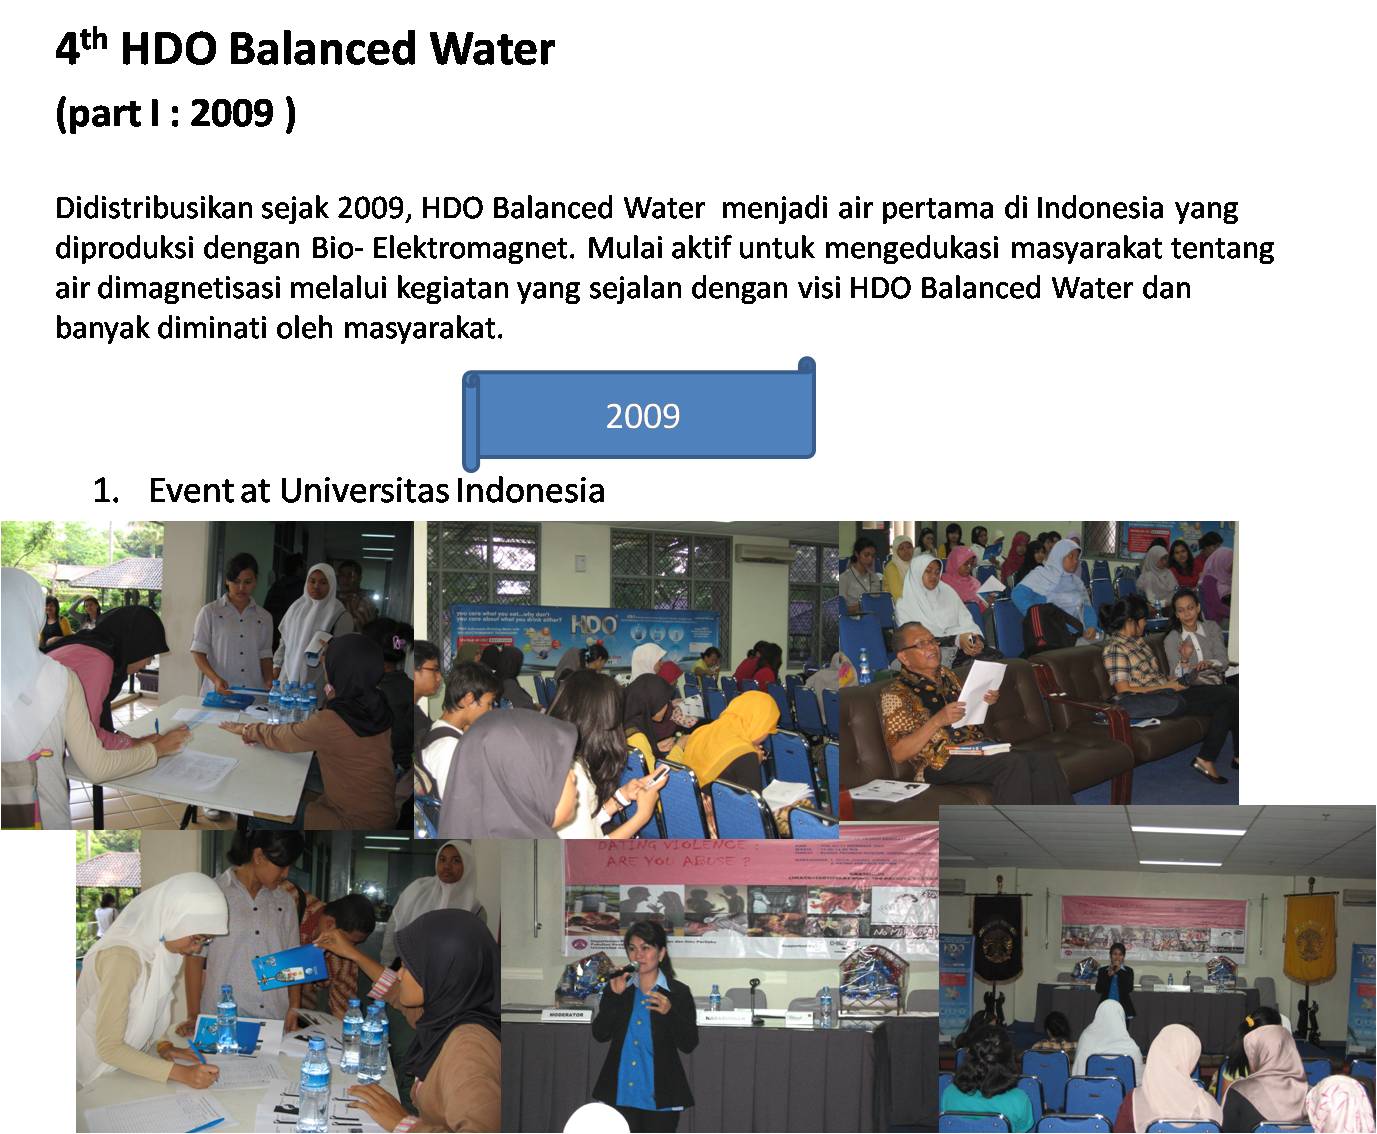 4th HDO Balanced Water part 1